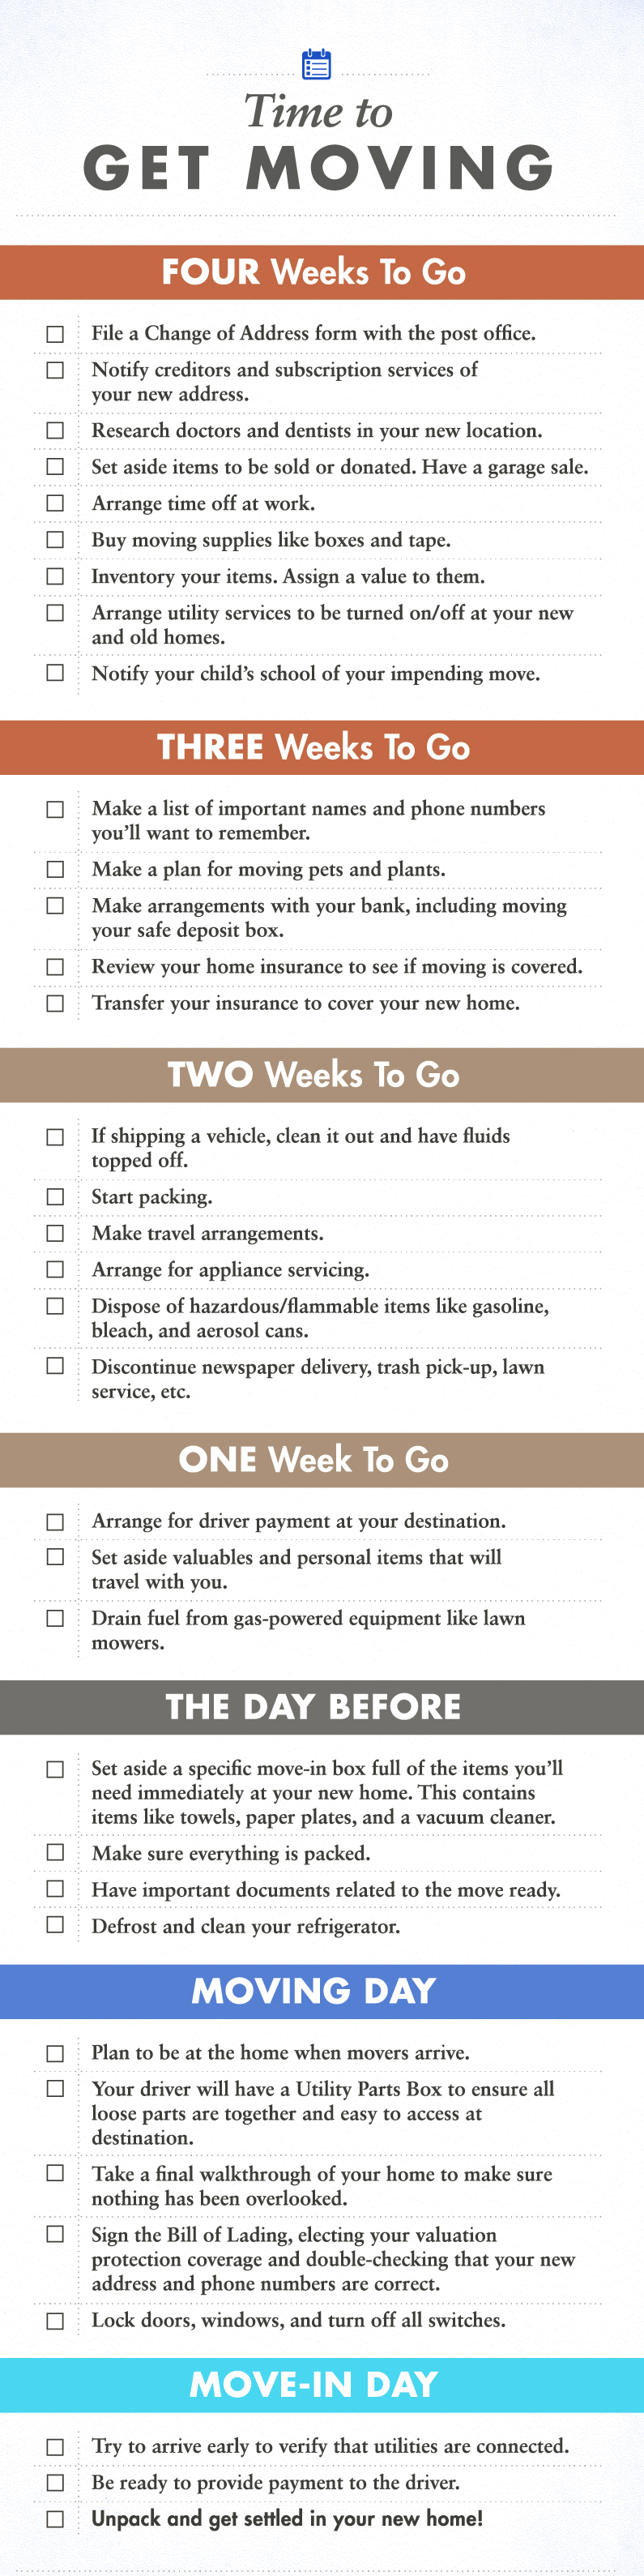 Moving-Checklist-Infographic-Florida Moving Checklist: 4 Week Countdown Orlando | Central Florida